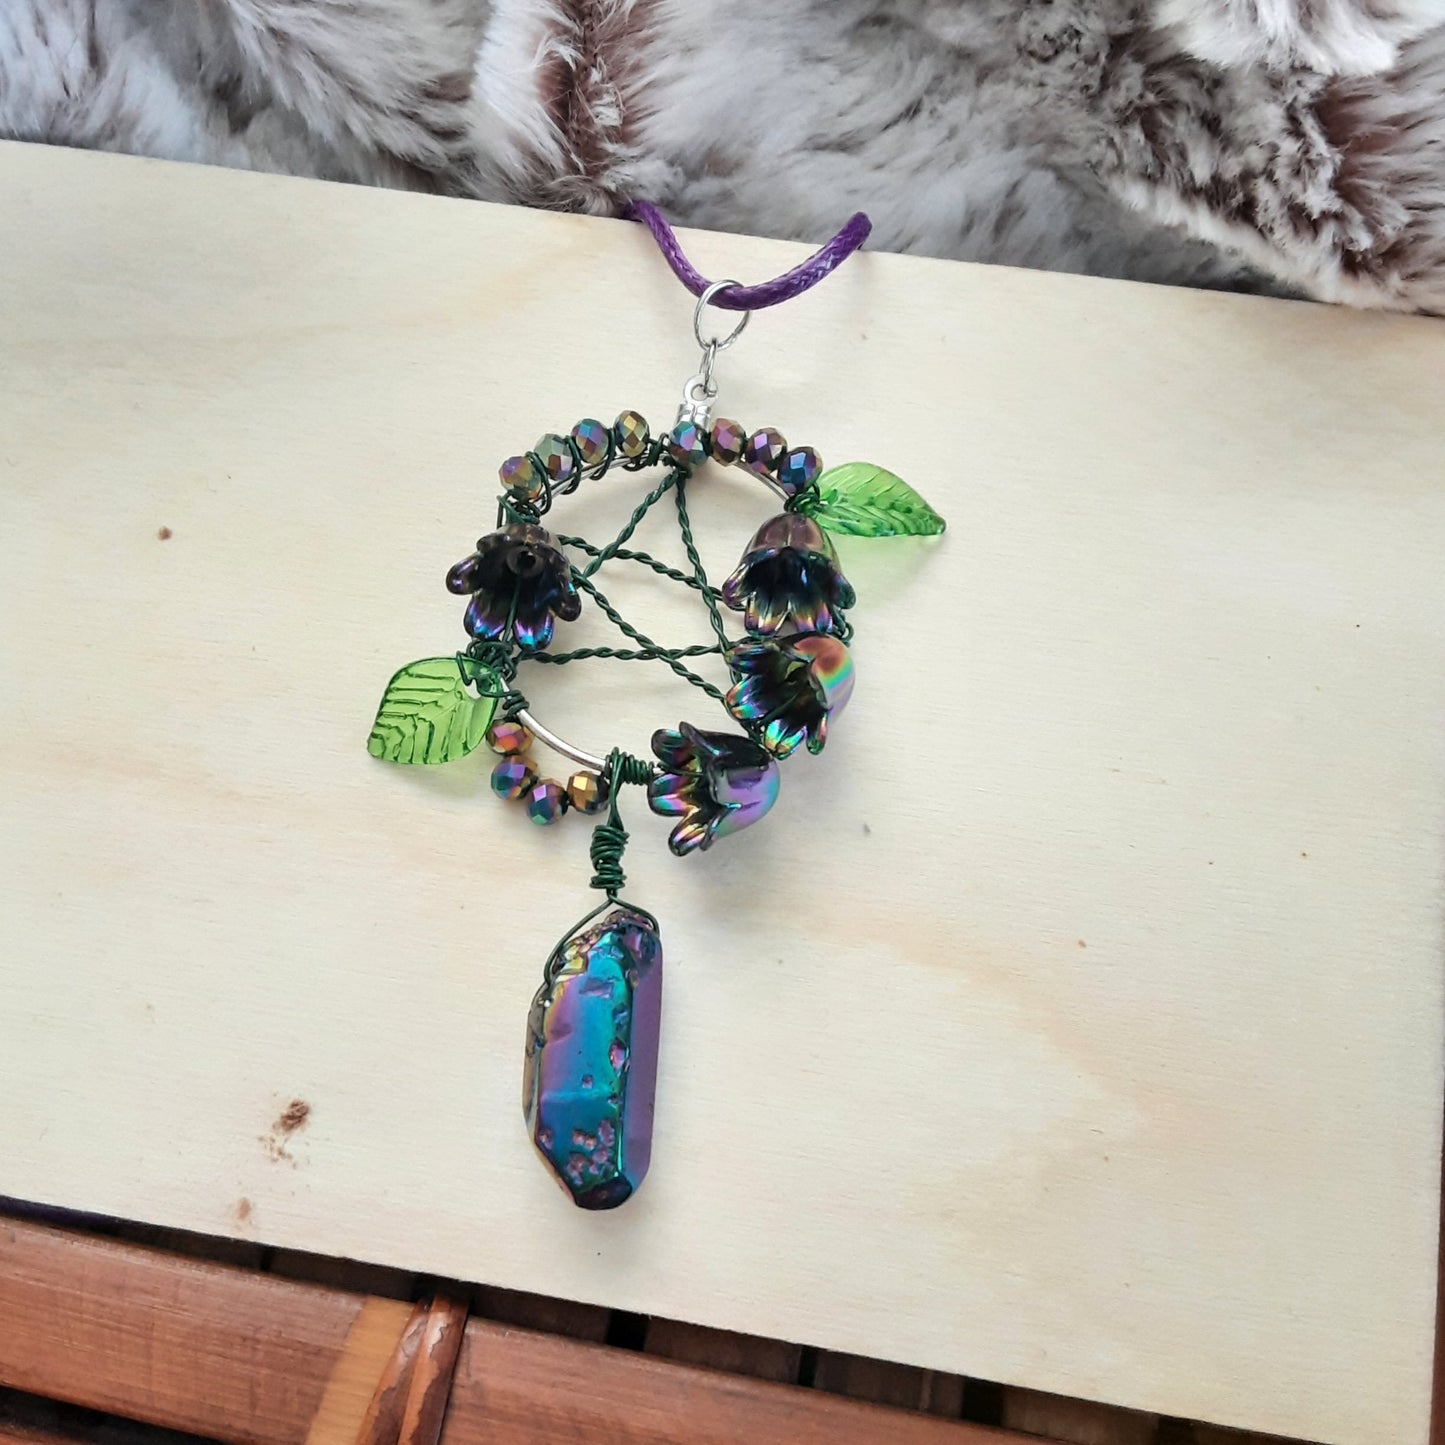 Flower pentacle necklace or car mirror hanger